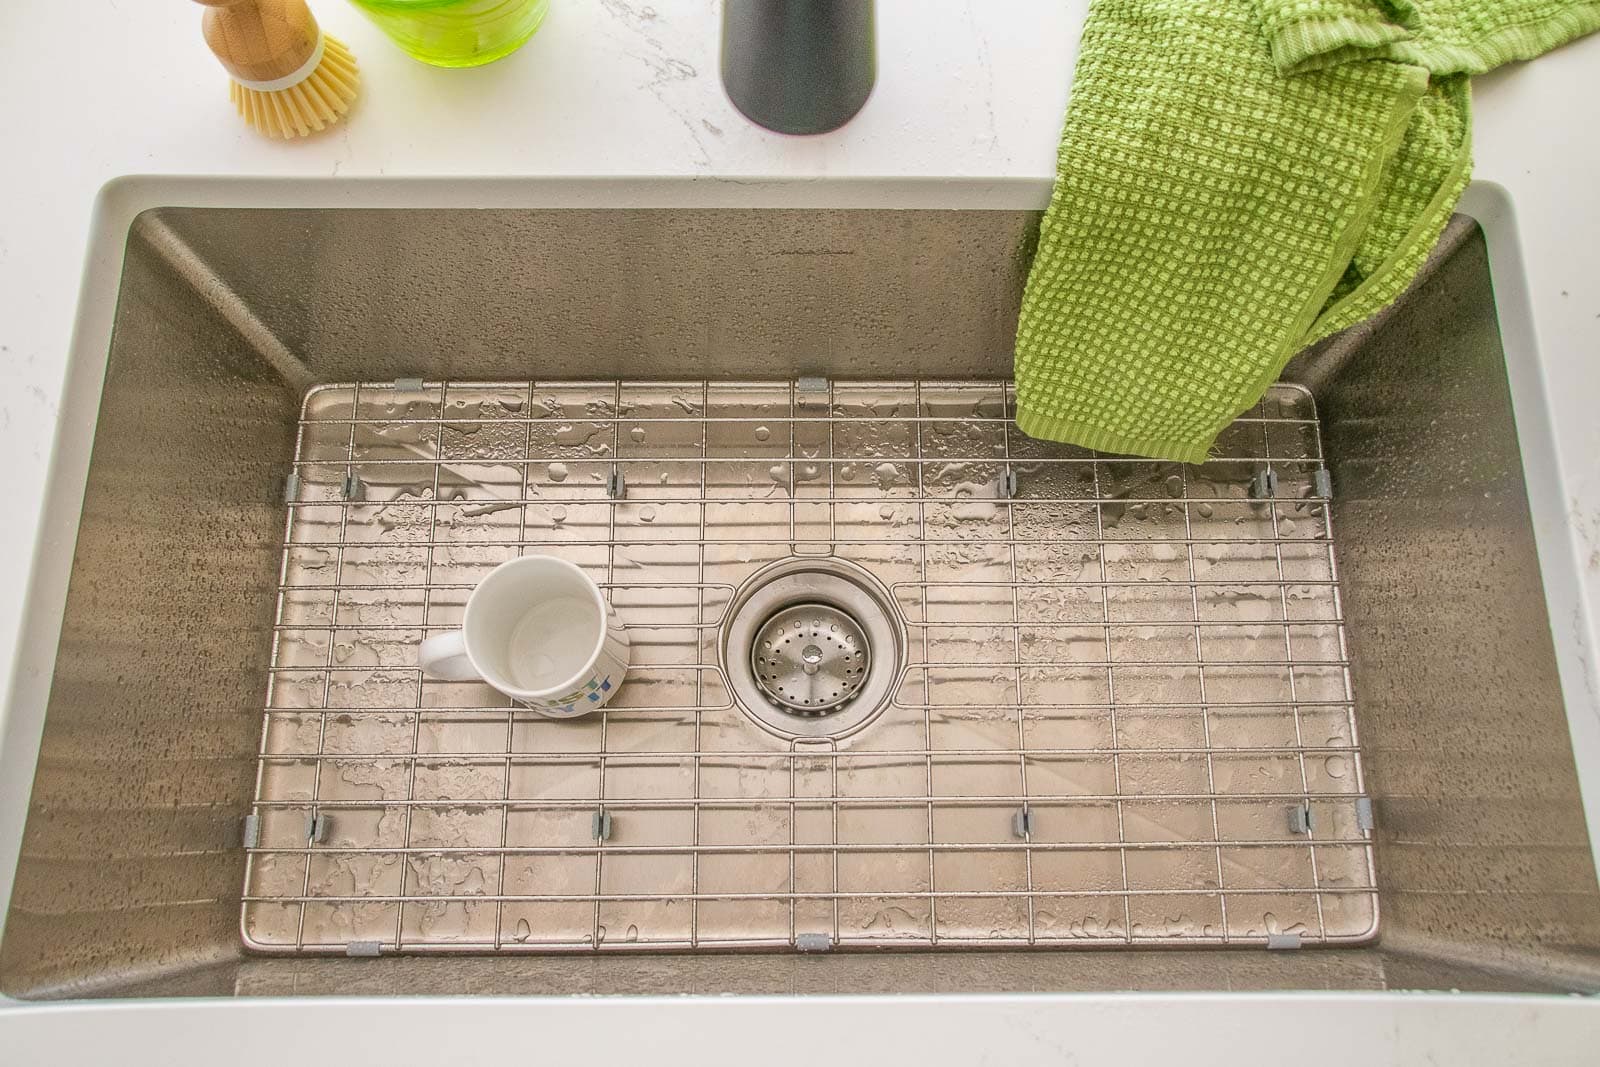 replacement kitchen sink american standard